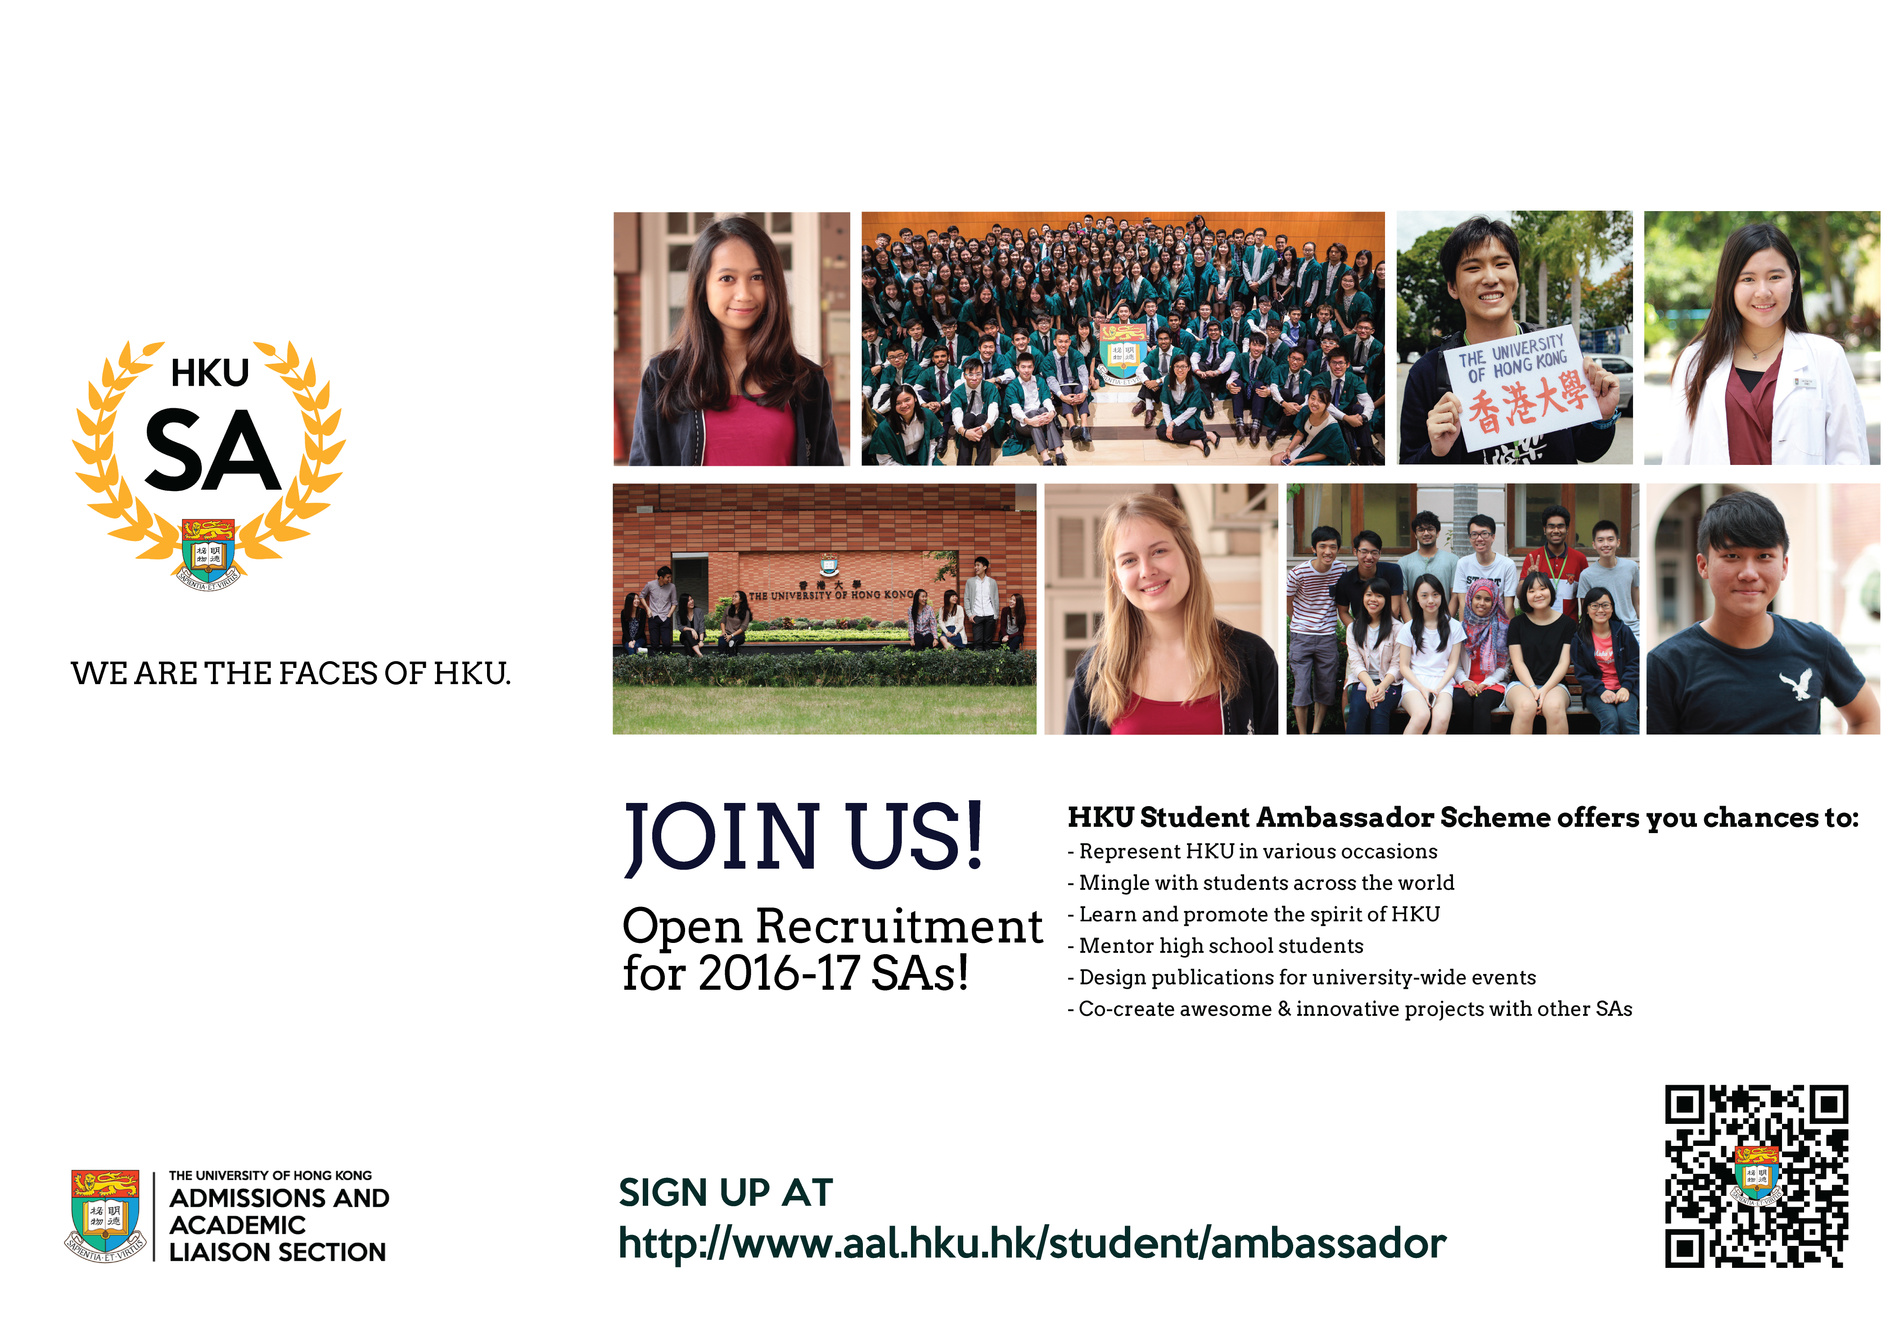 HKU Student Ambassador Scheme